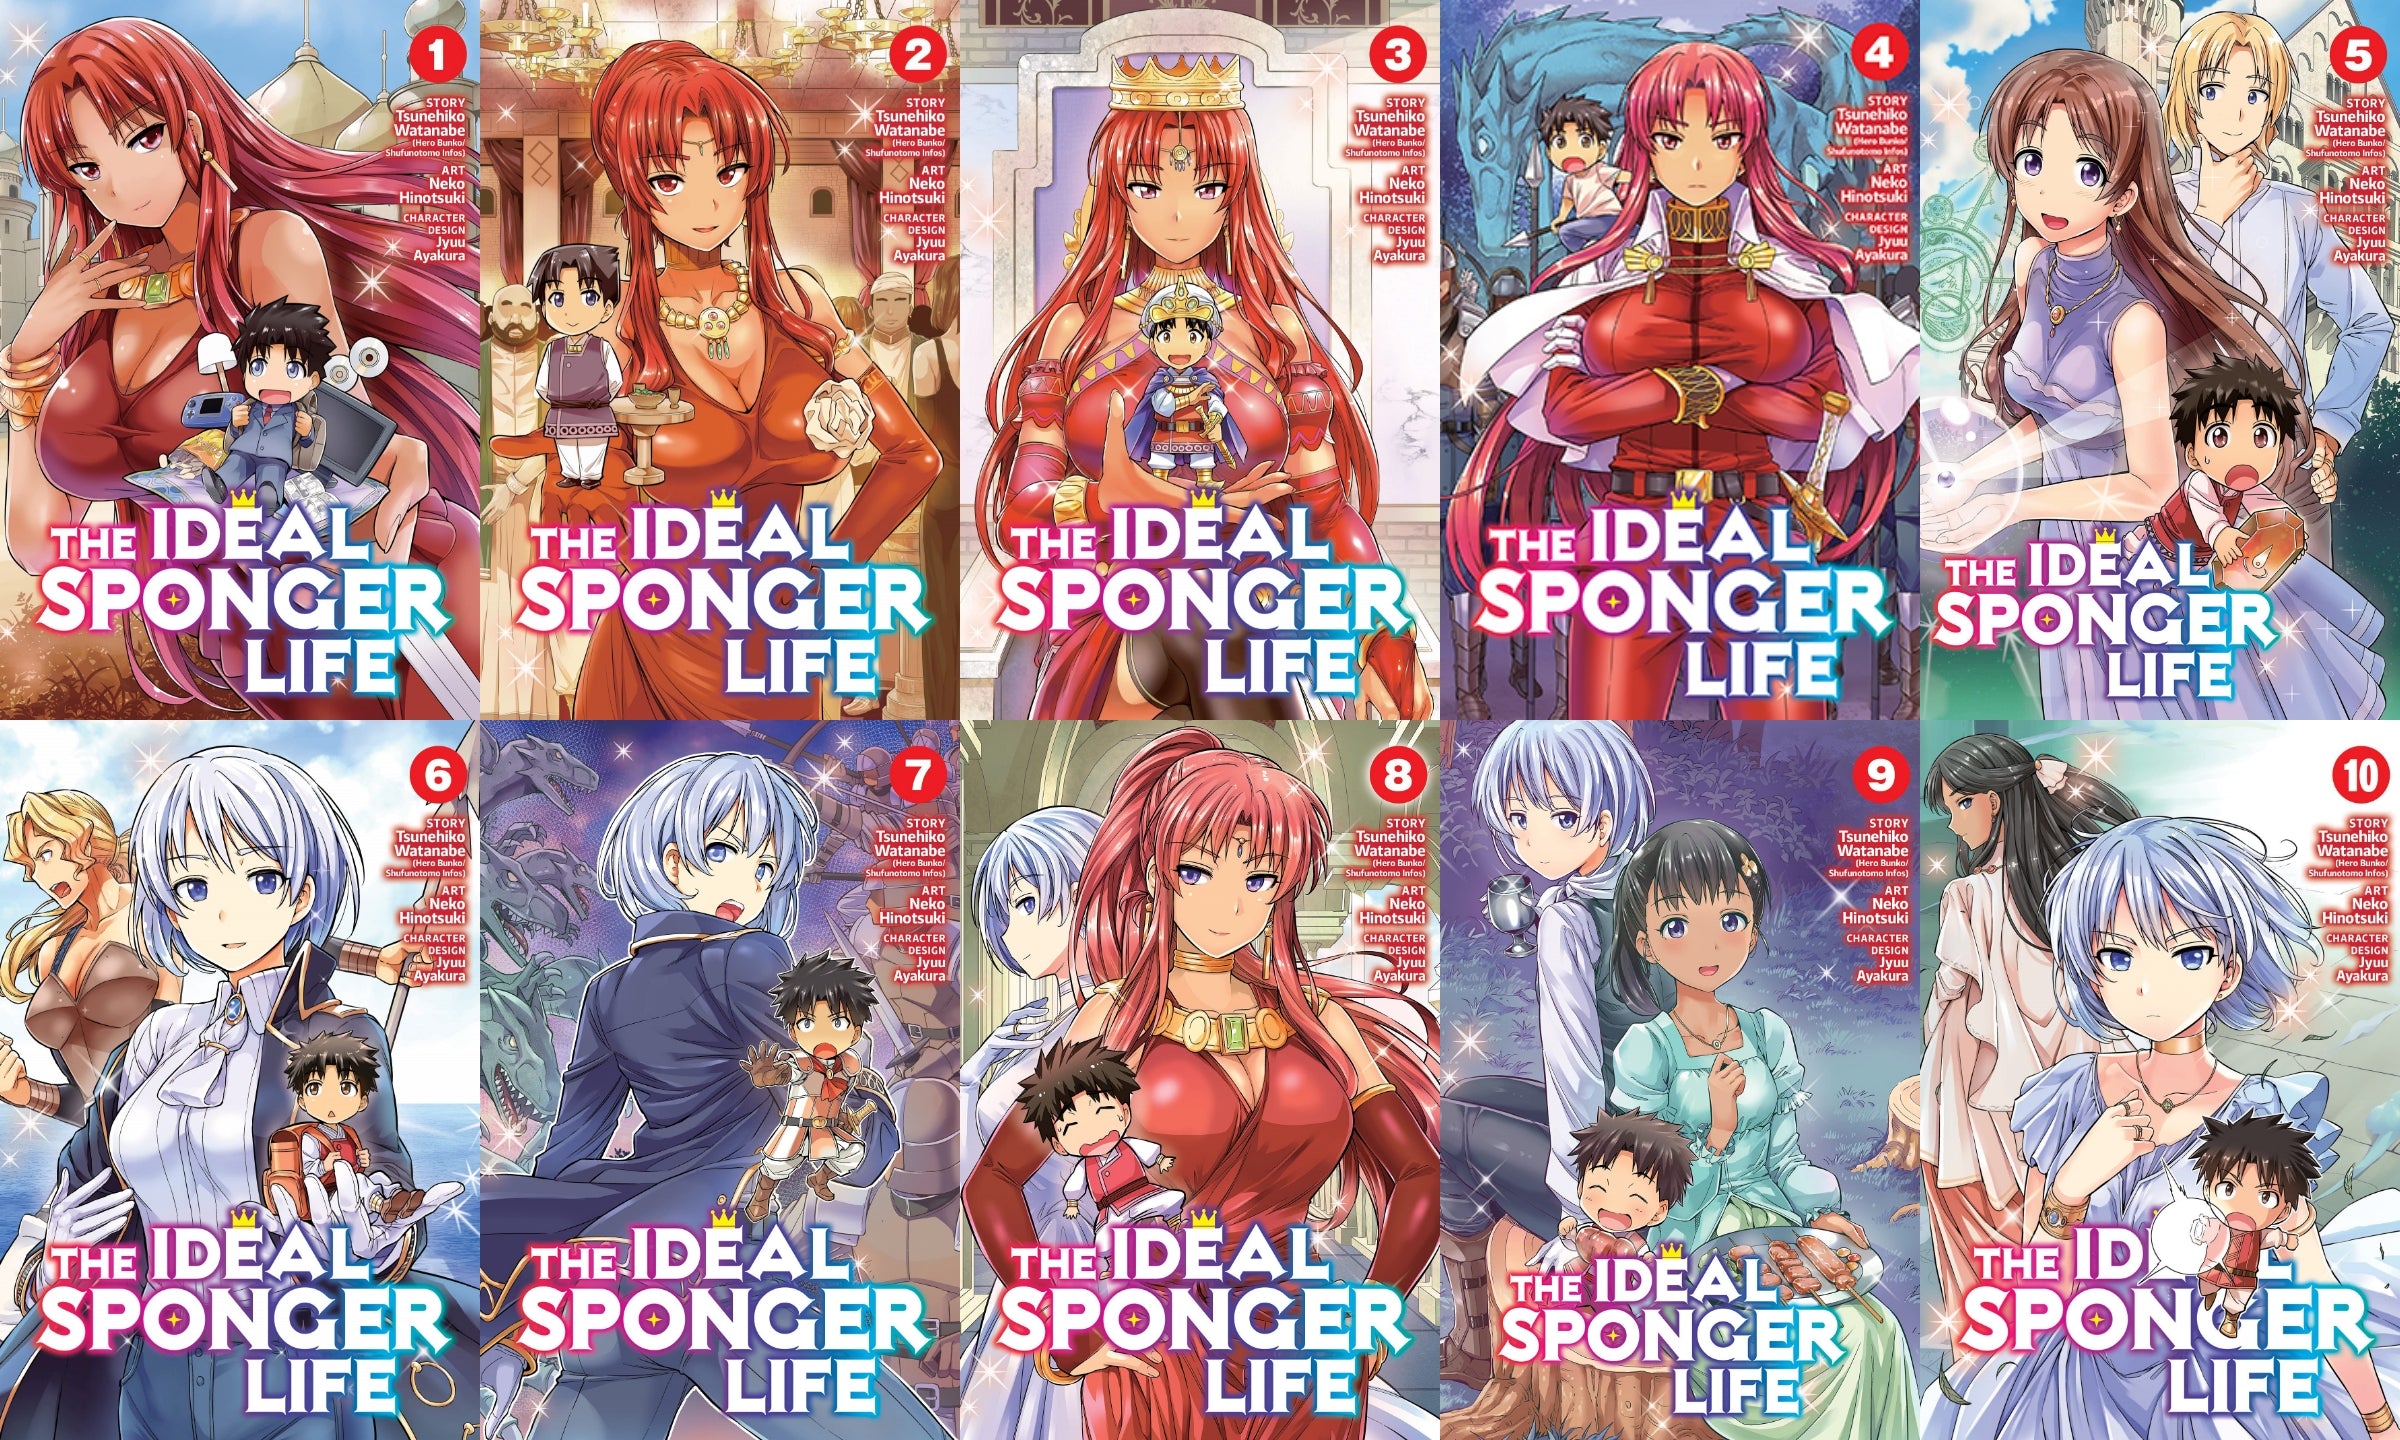 The Ideal Sponger Life Full Current Set (1-10)